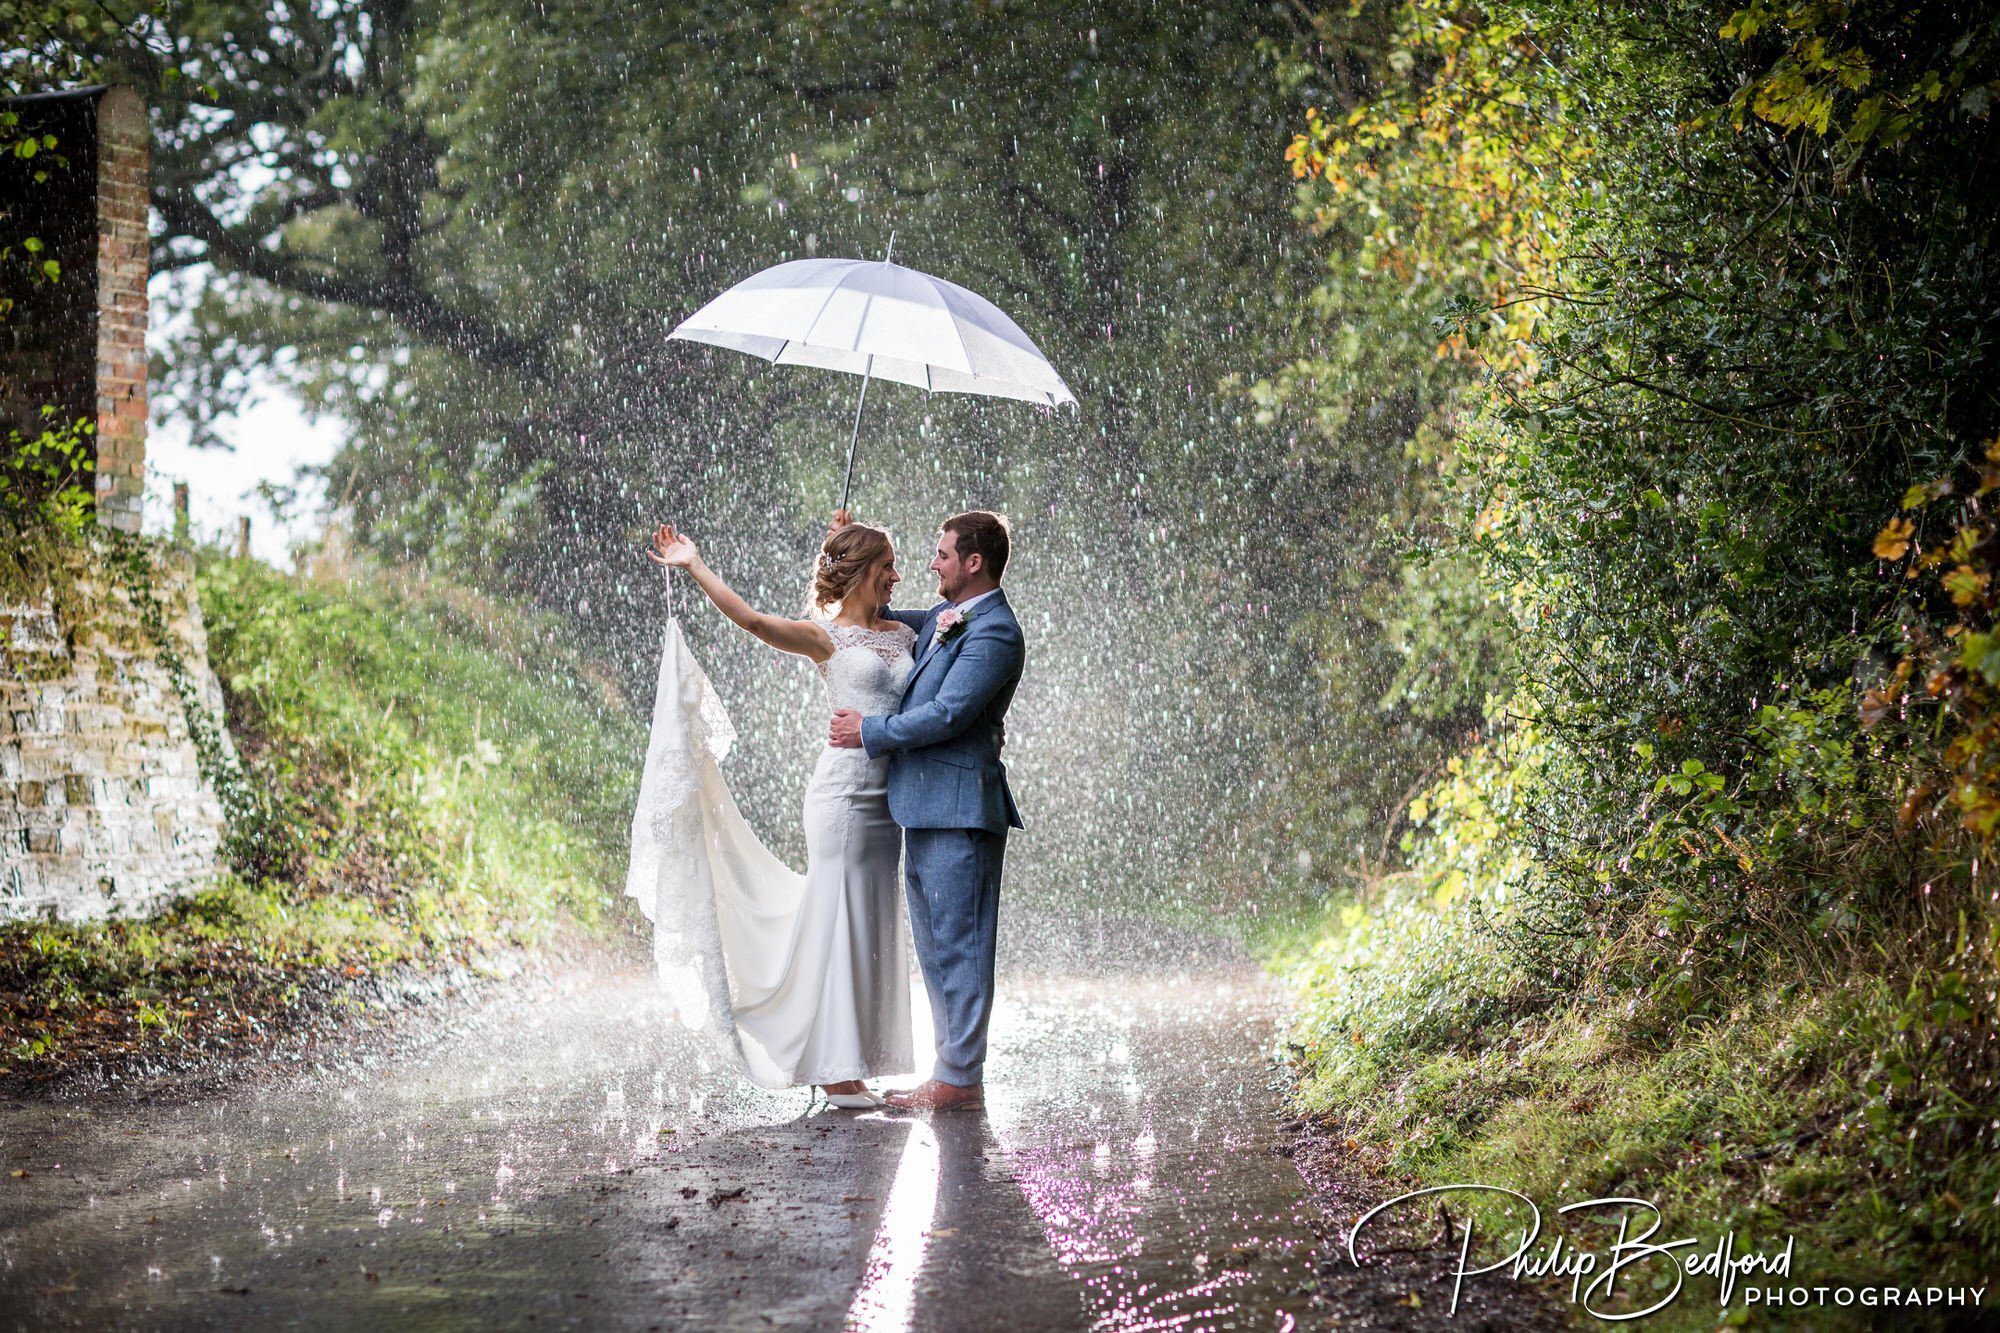 Fitzleroi Barn Autumn Wedding: Emma & Michael in the rain